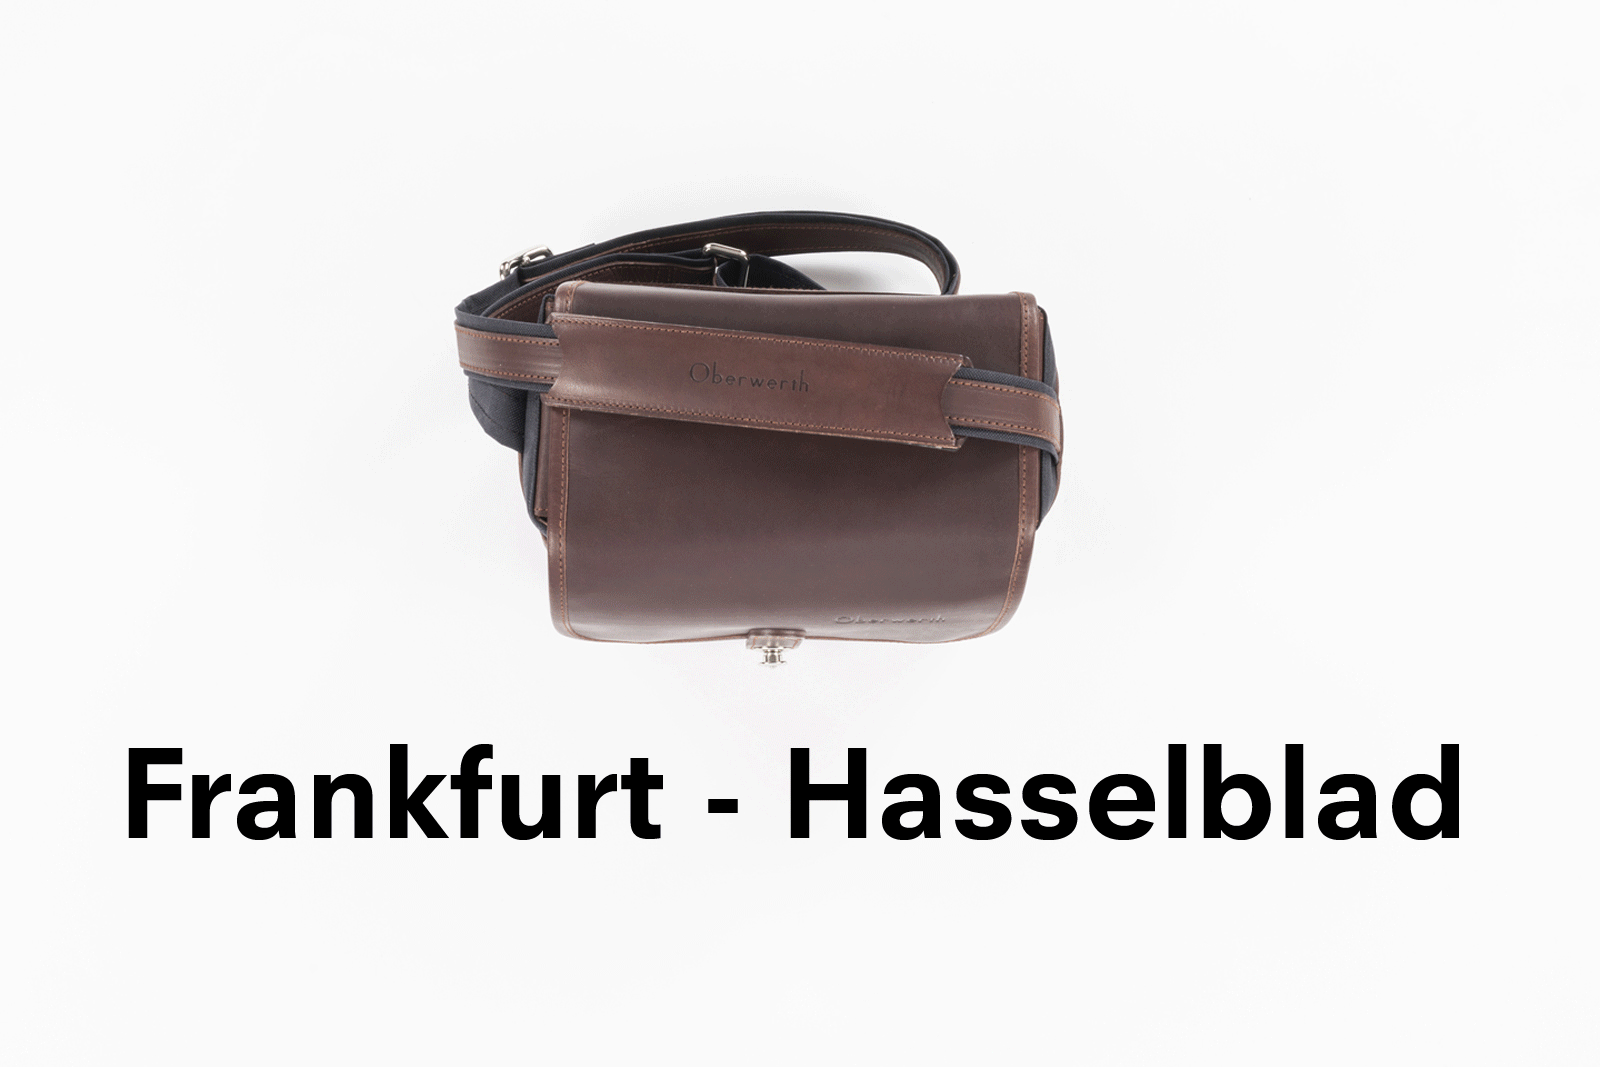 Camera bag FRANKFURT